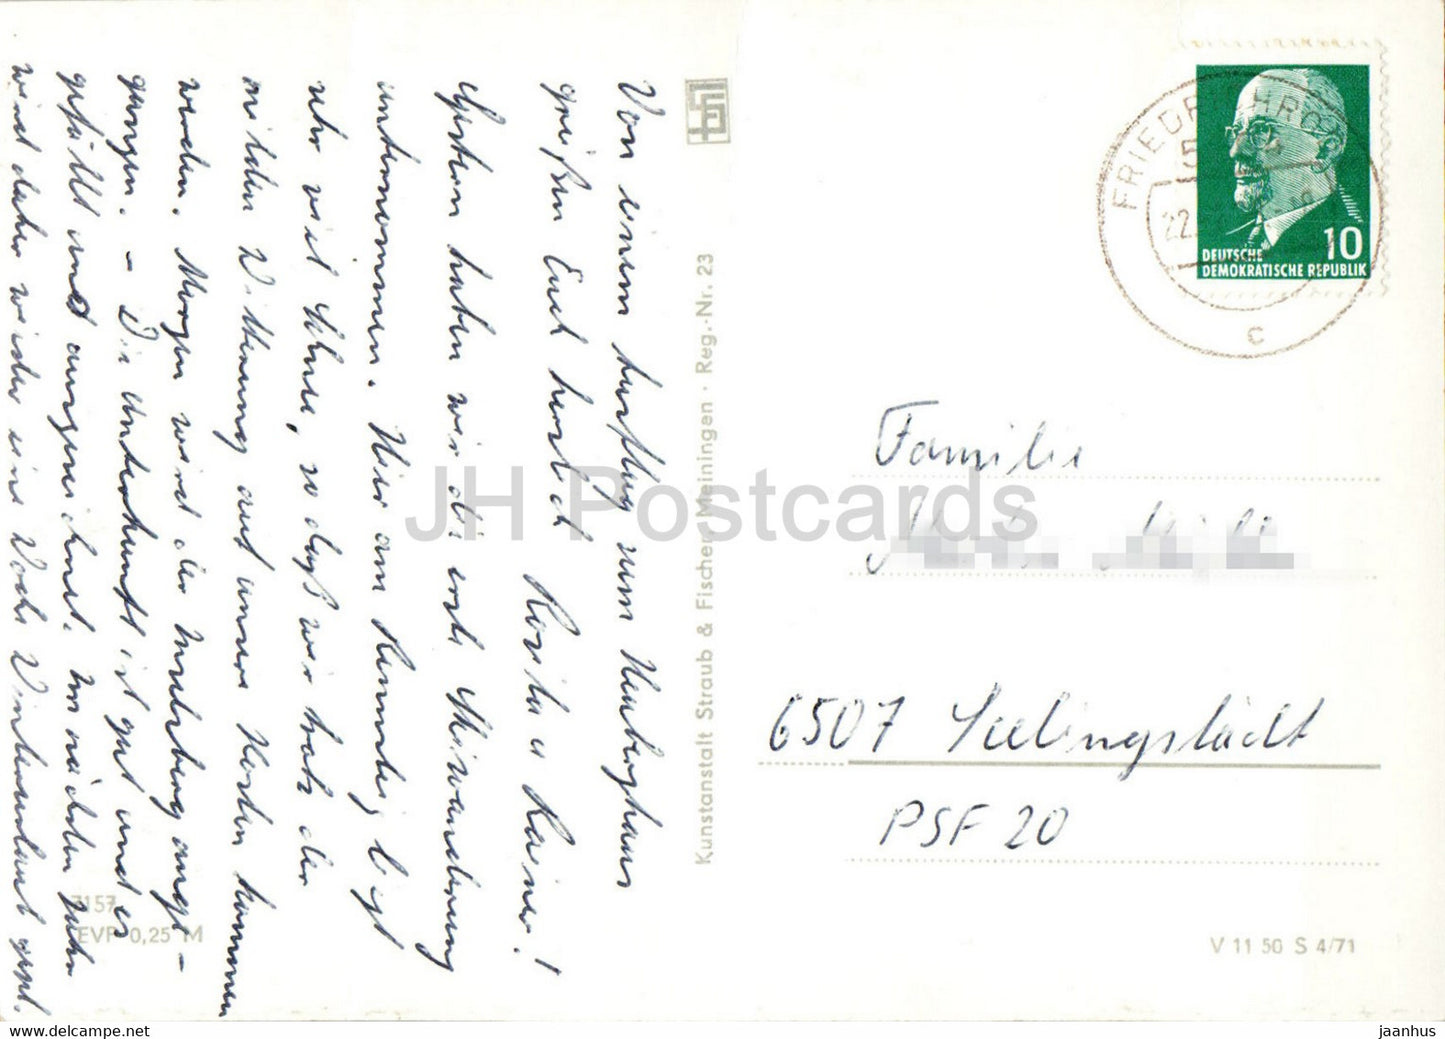 Luftkurort Friedrichroda - FDGB Ferienheim Walter Ulbricht - Kirche - Heuberghaus - old postcard - Germany DDR - used